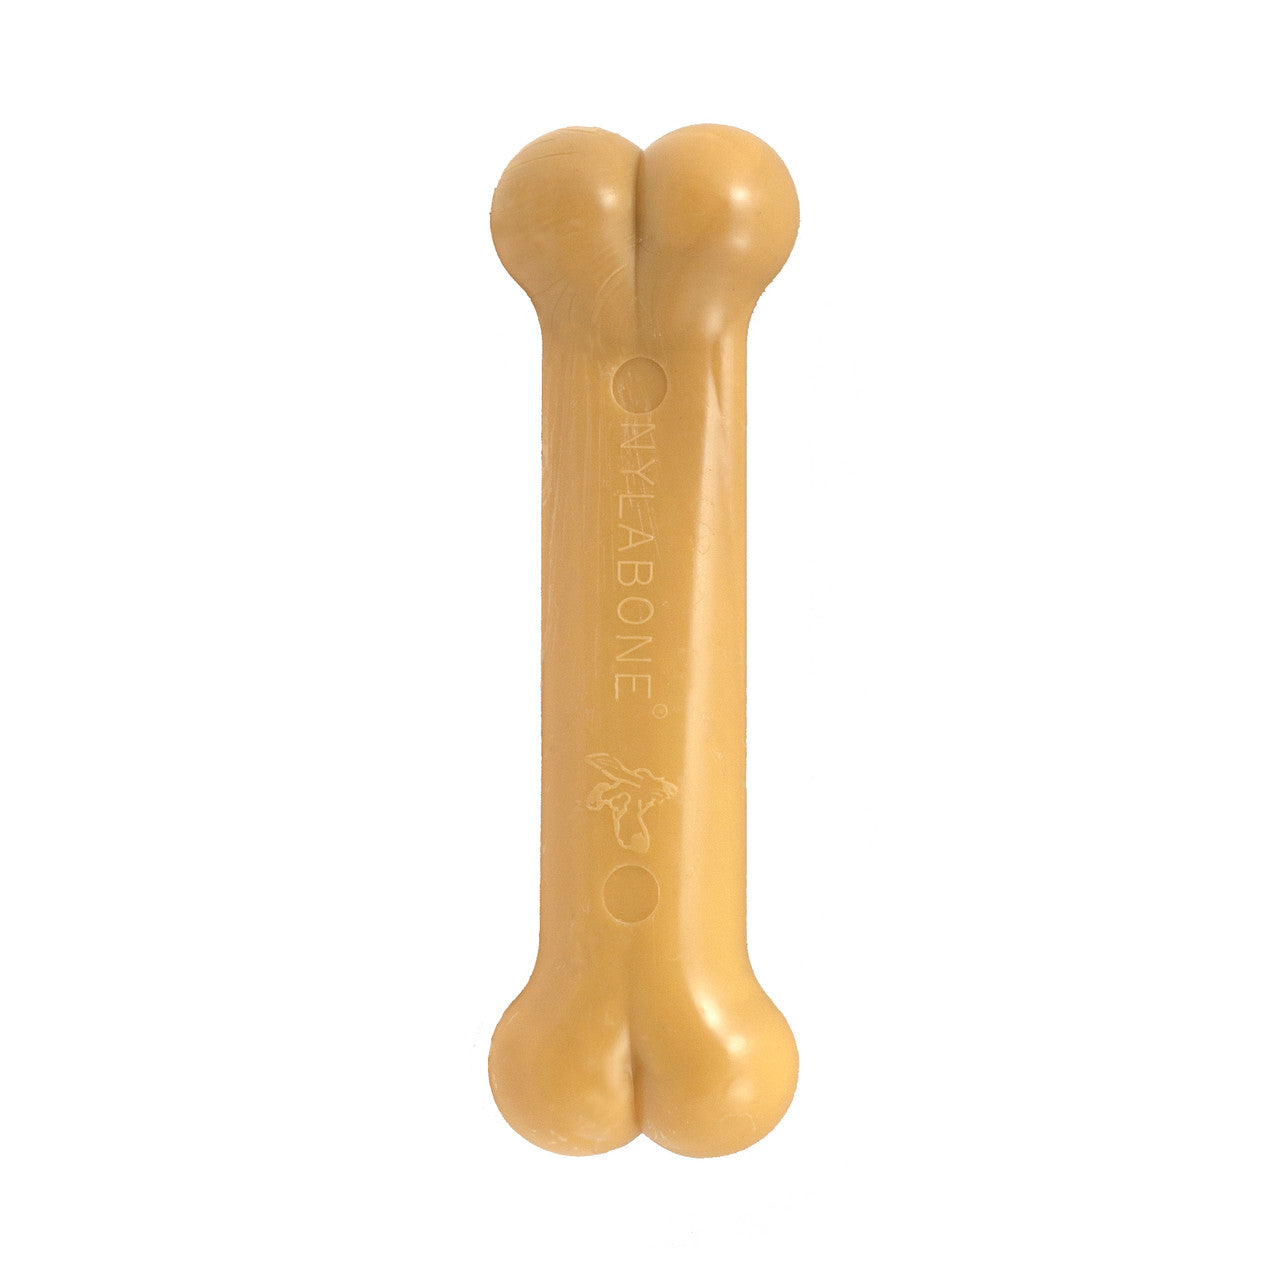 Nylabone Power Chew Durable Dog Toy Peanut Butter Medium/Wolf (1 Count)